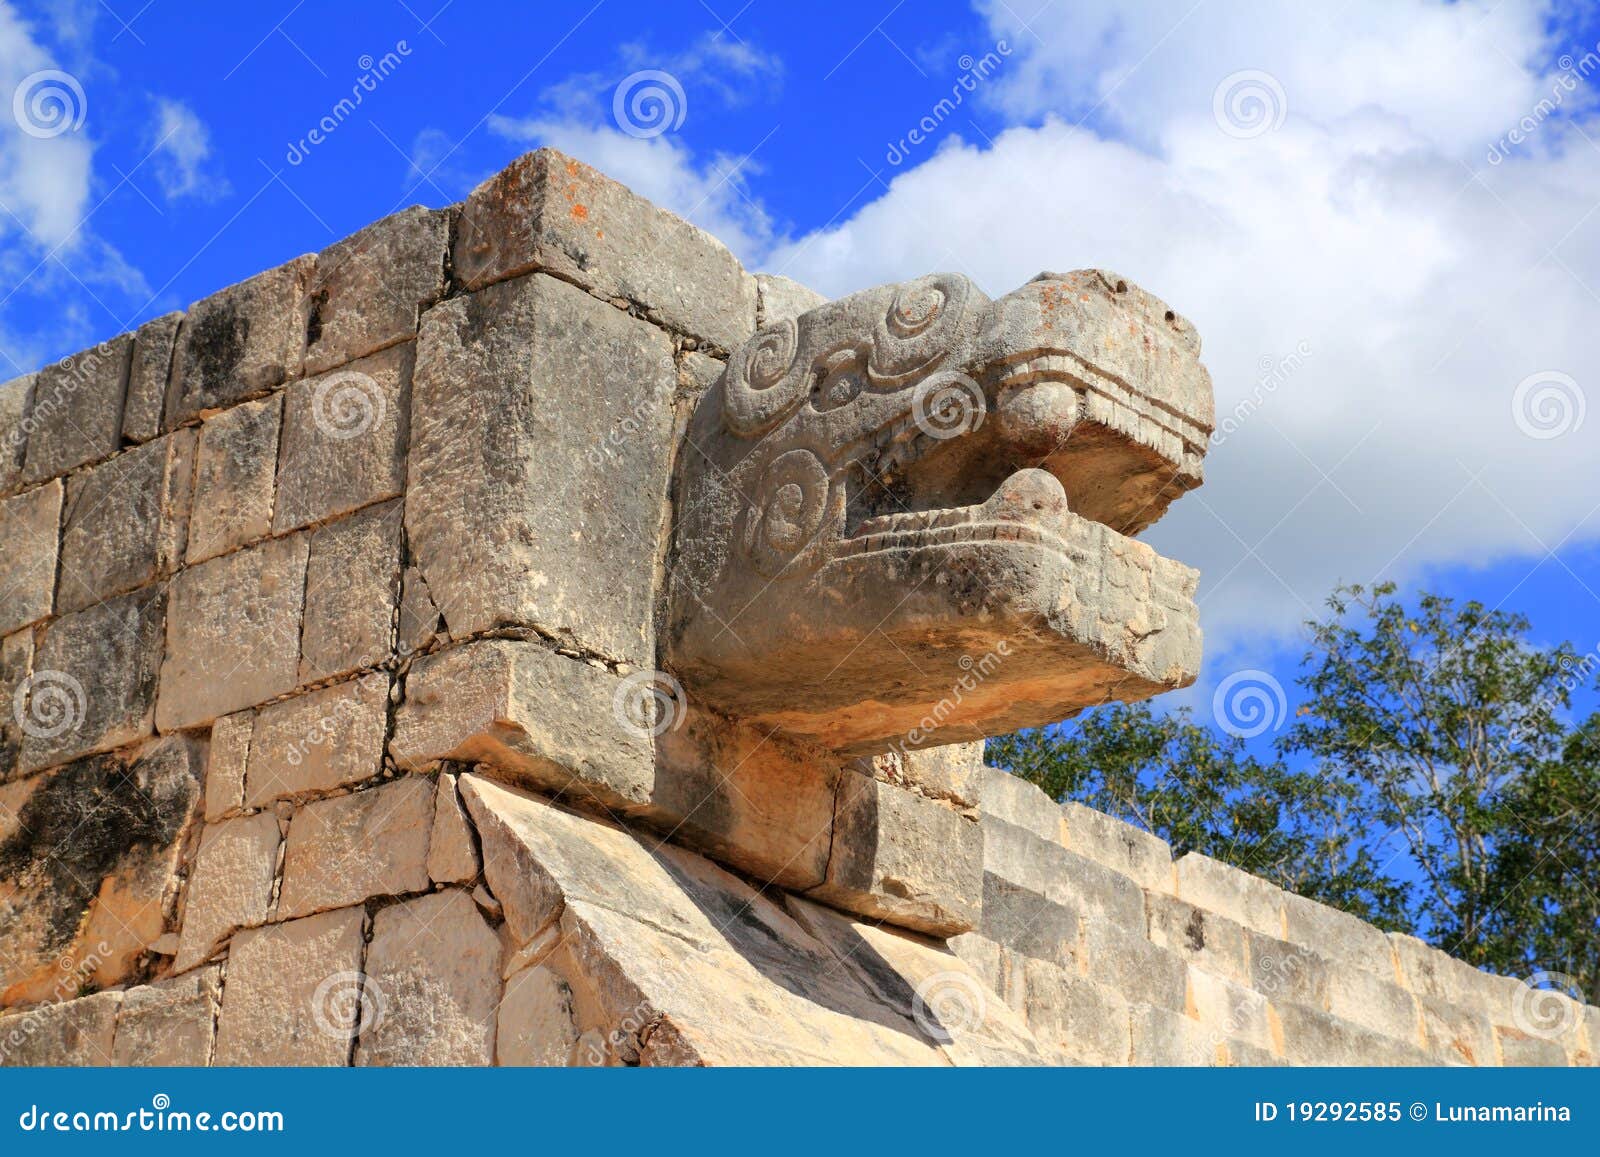 chichen itza snake mayan ruins mexico yucatan